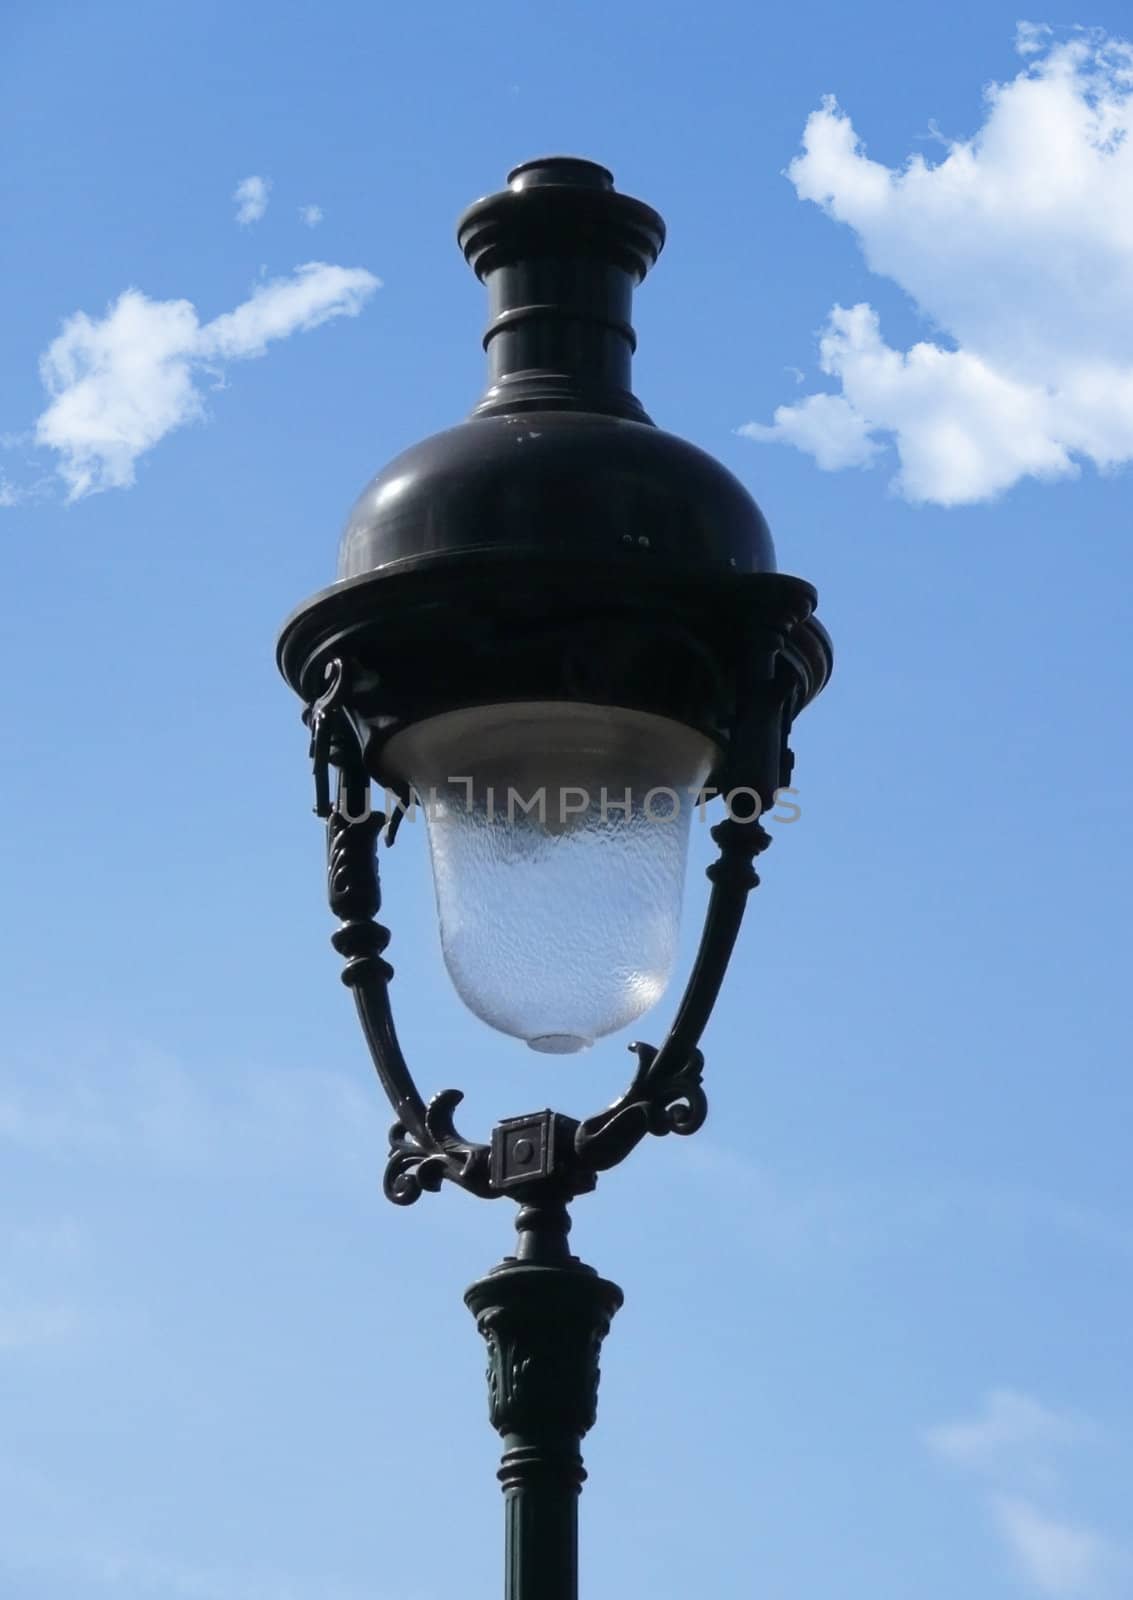 old 1900's Street lamp on a blue sky